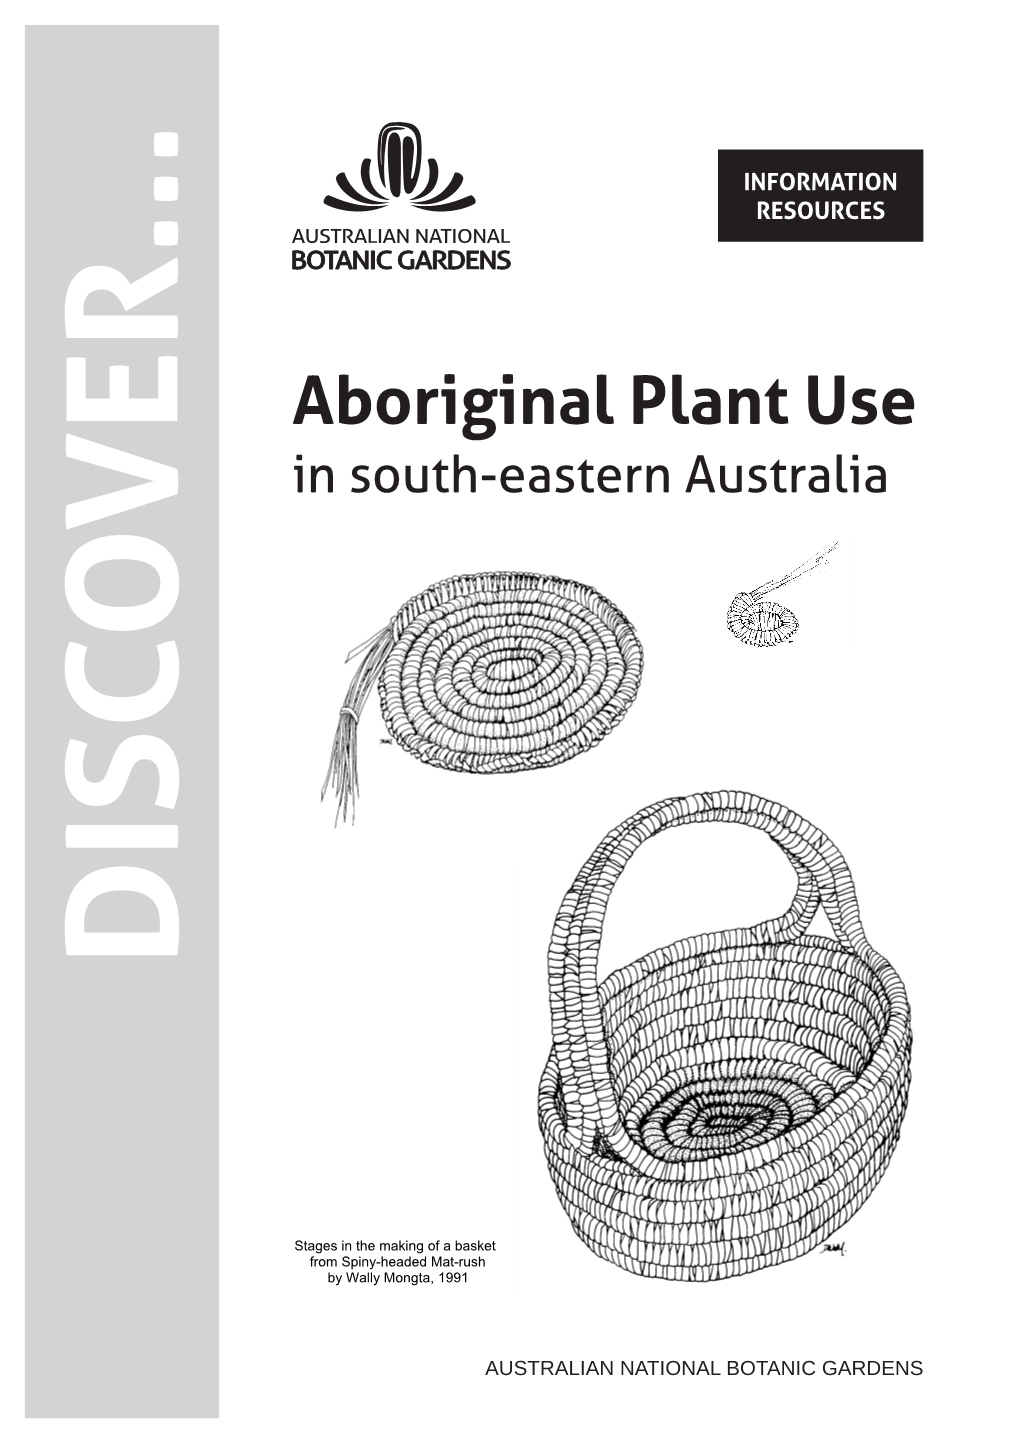 Aboriginal Plant Use in South-Eastern Australia